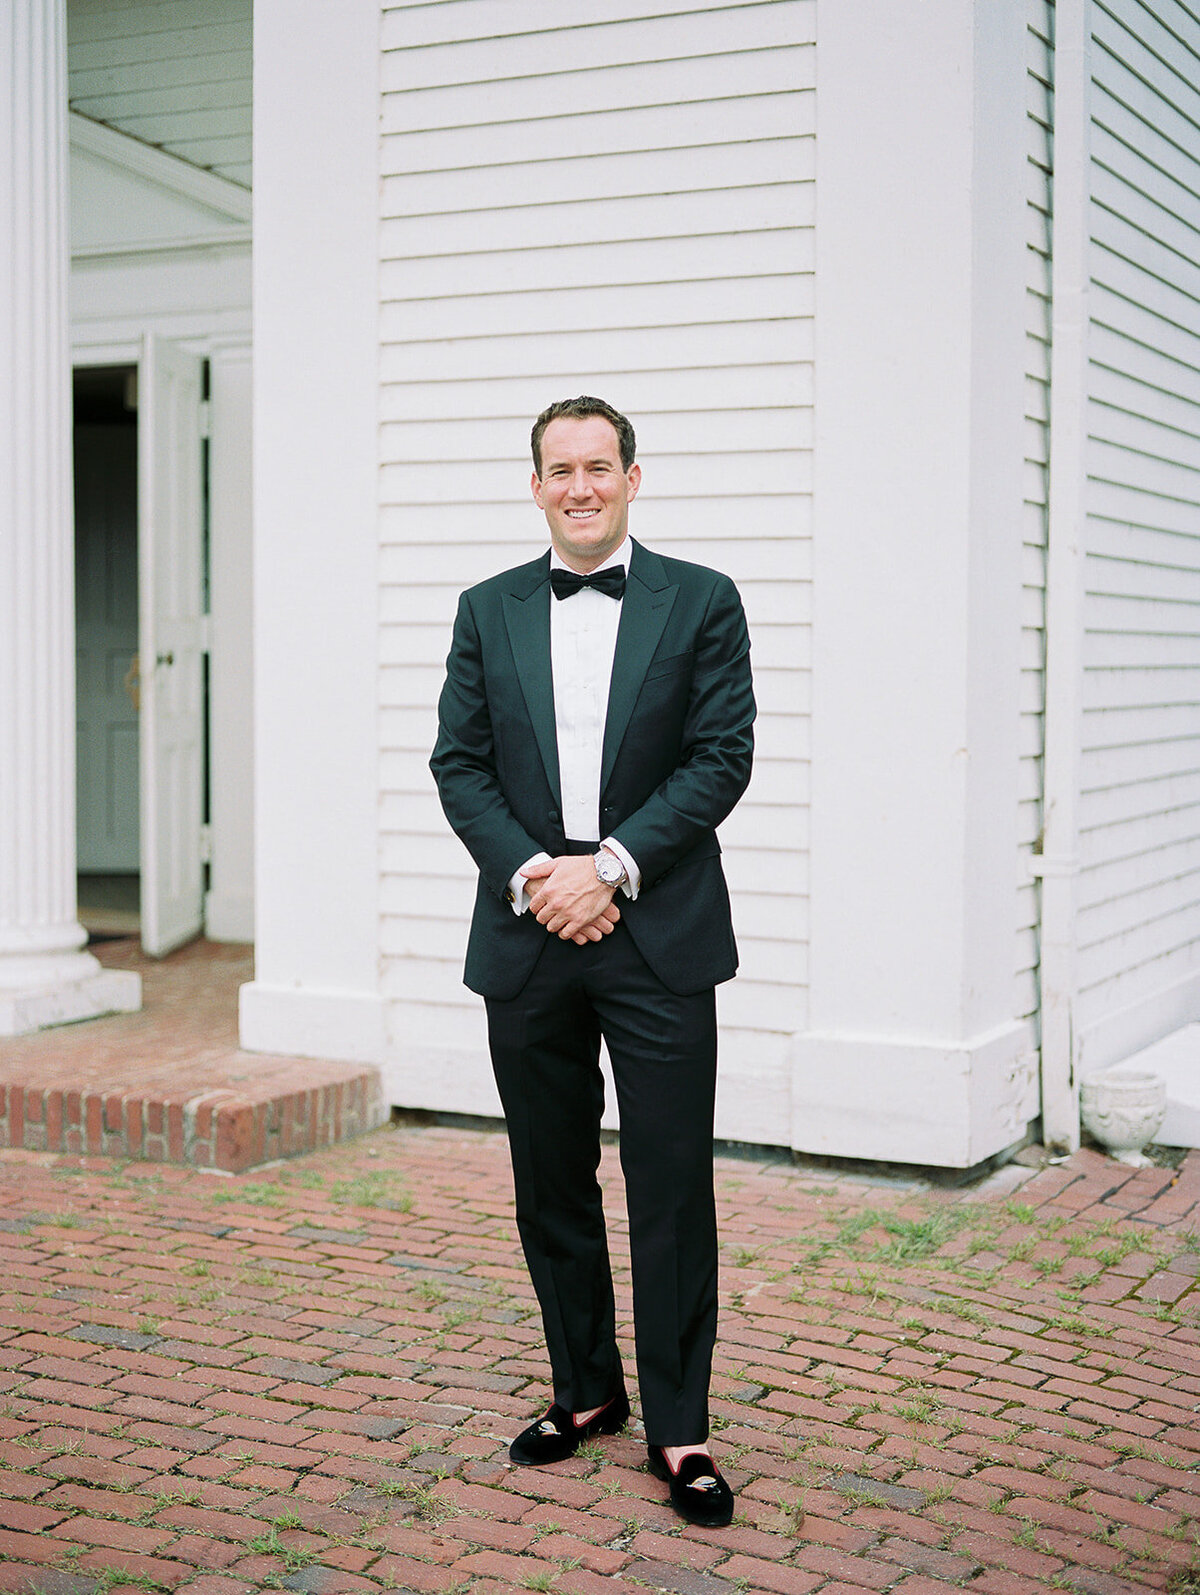 Kate-Murtaugh-Events-Boston-MA-wedding-planner-black-tie-groom